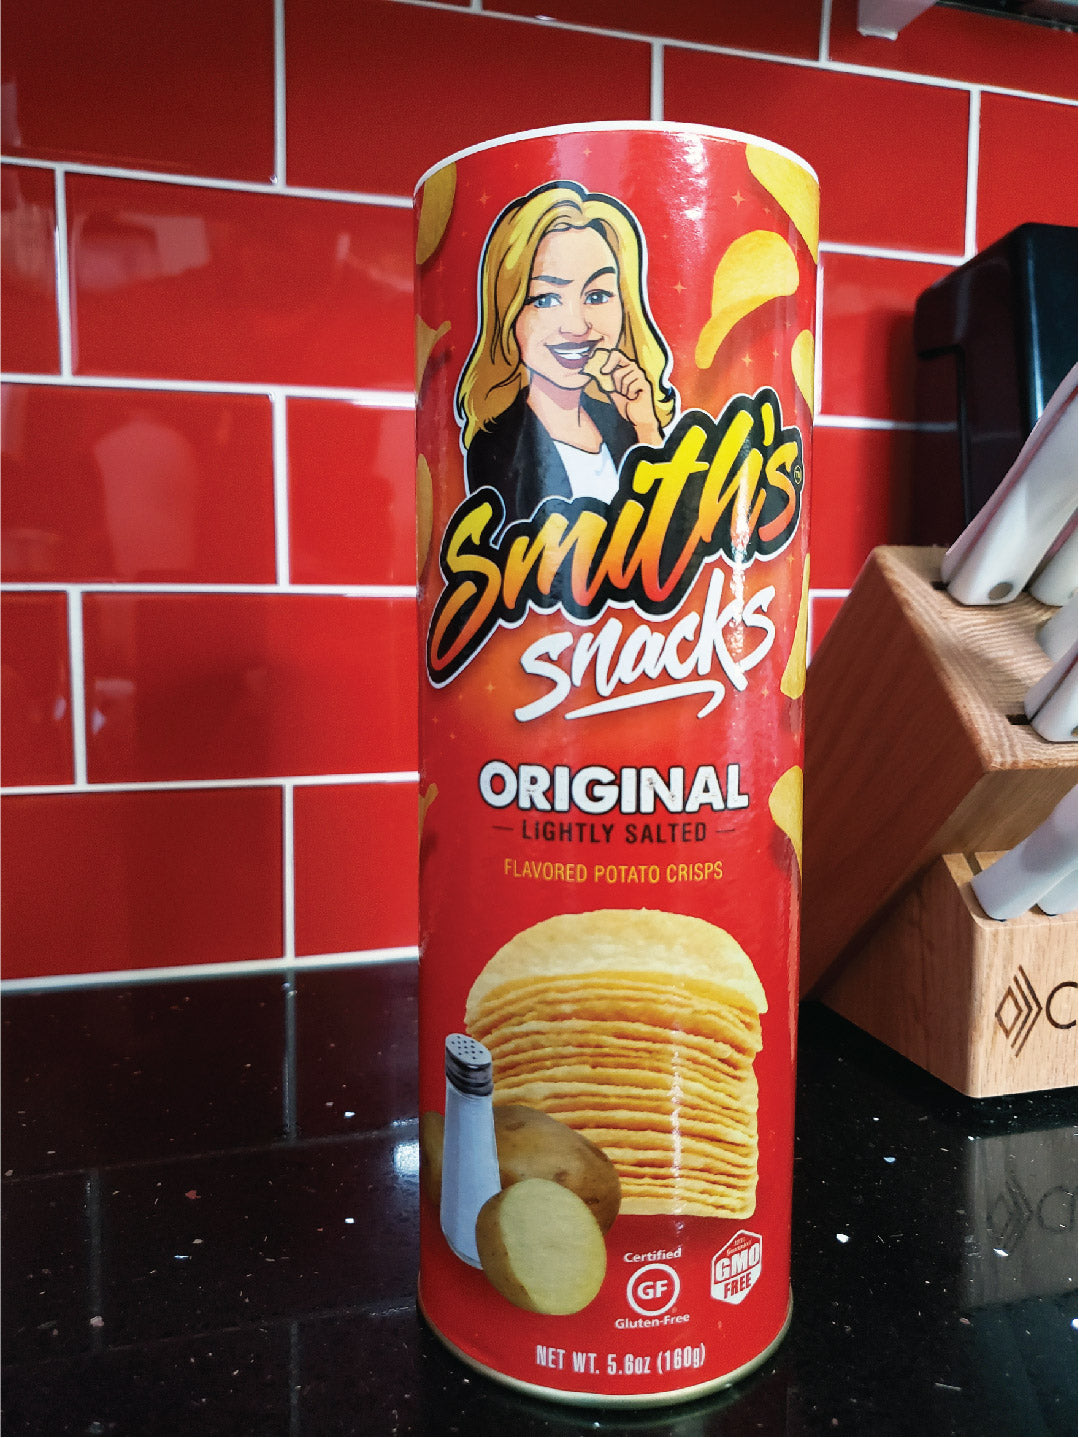 Snake in a Can Prank Gag - Smith's Snacks Potato Chip Can Snake Joke